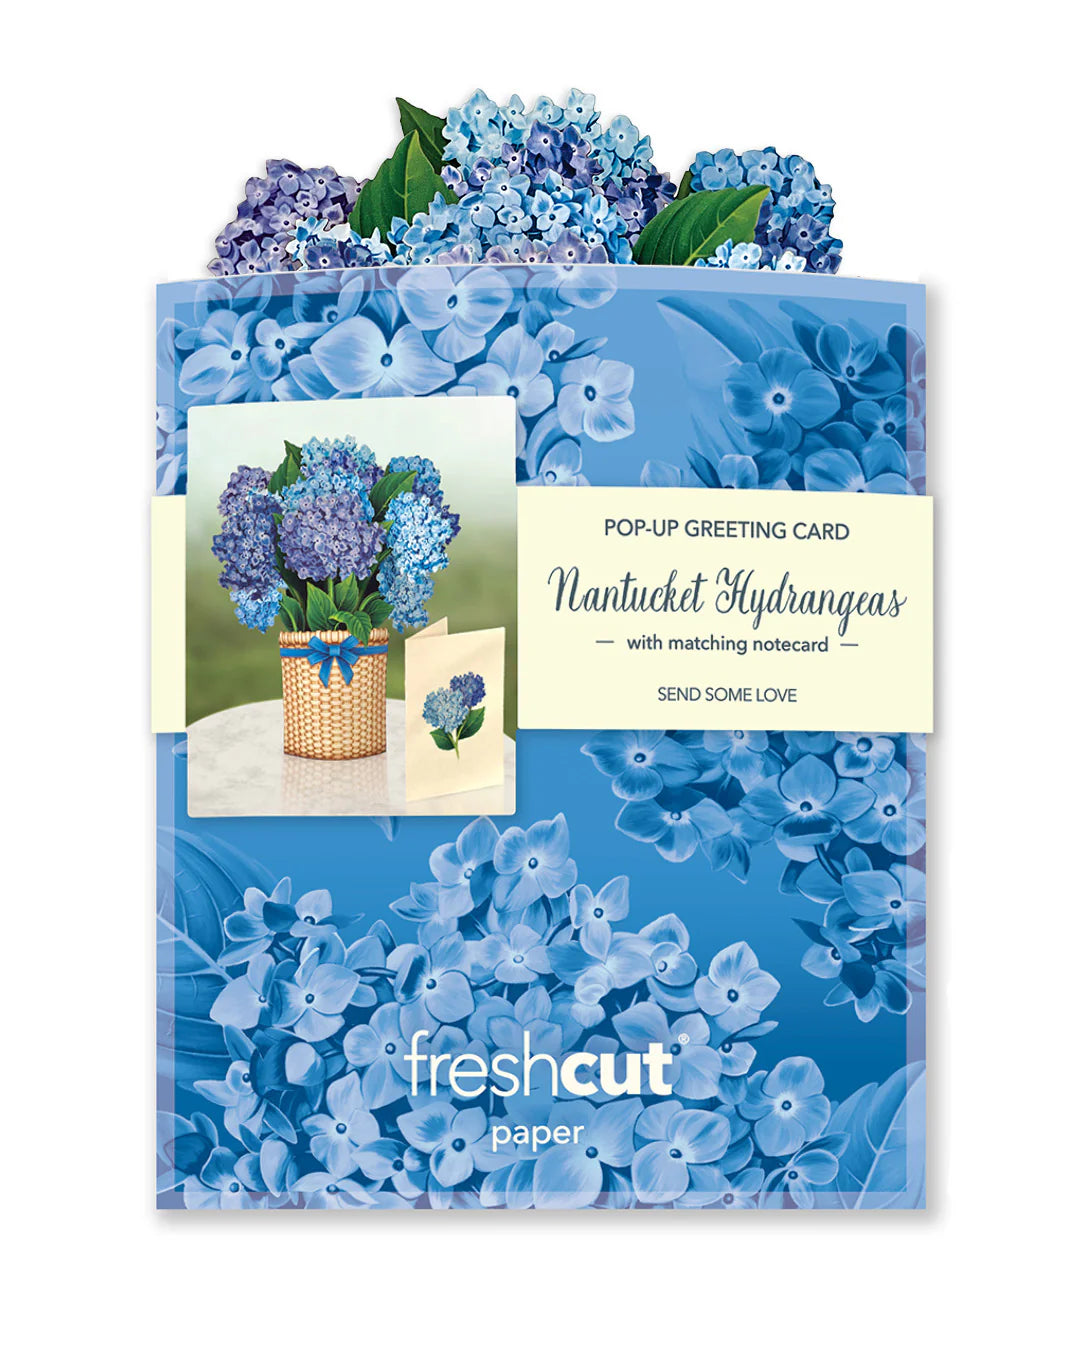 Nantucket Hydrangeas bouquet in its mailing envelope.